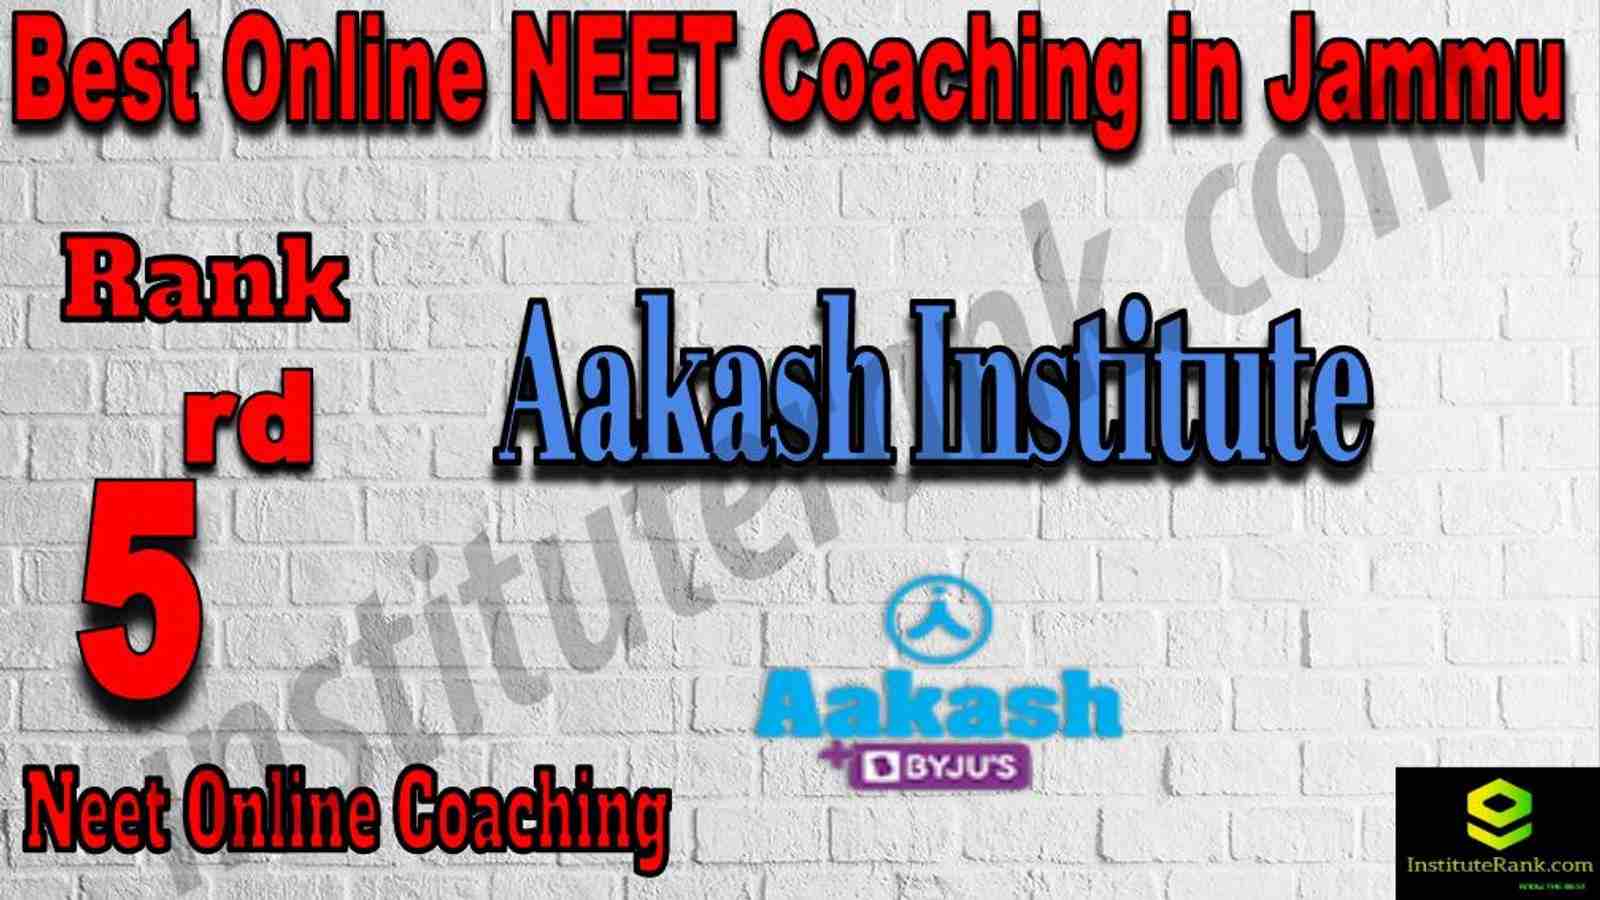 5th Best Online Neet Coaching in Jammu